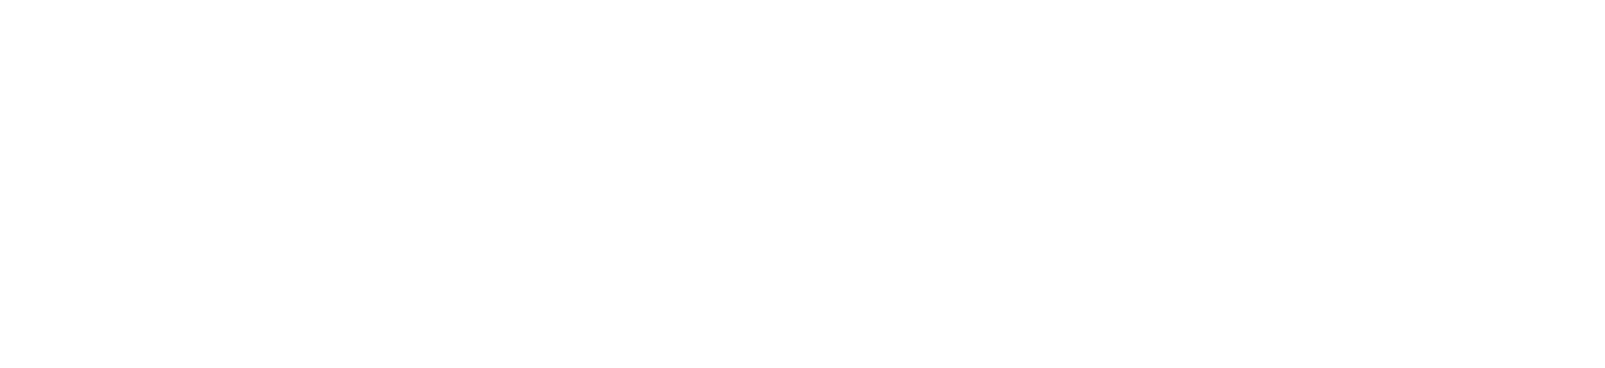 Latham Group logo large for dark backgrounds (transparent PNG)